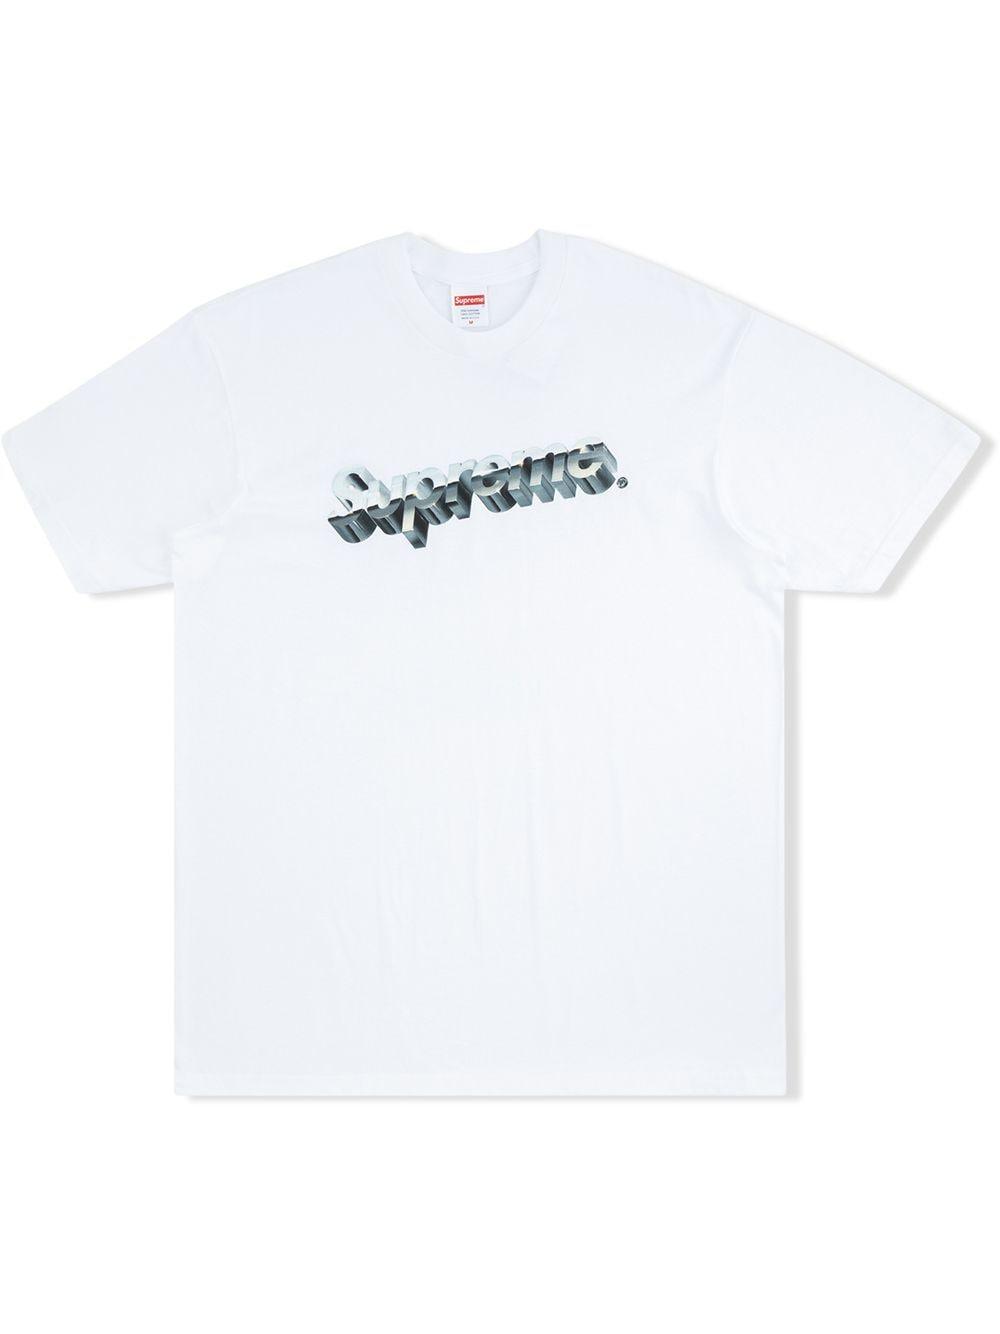 Supreme Cotton Chrome Logo T-shirt in White for Men - Lyst